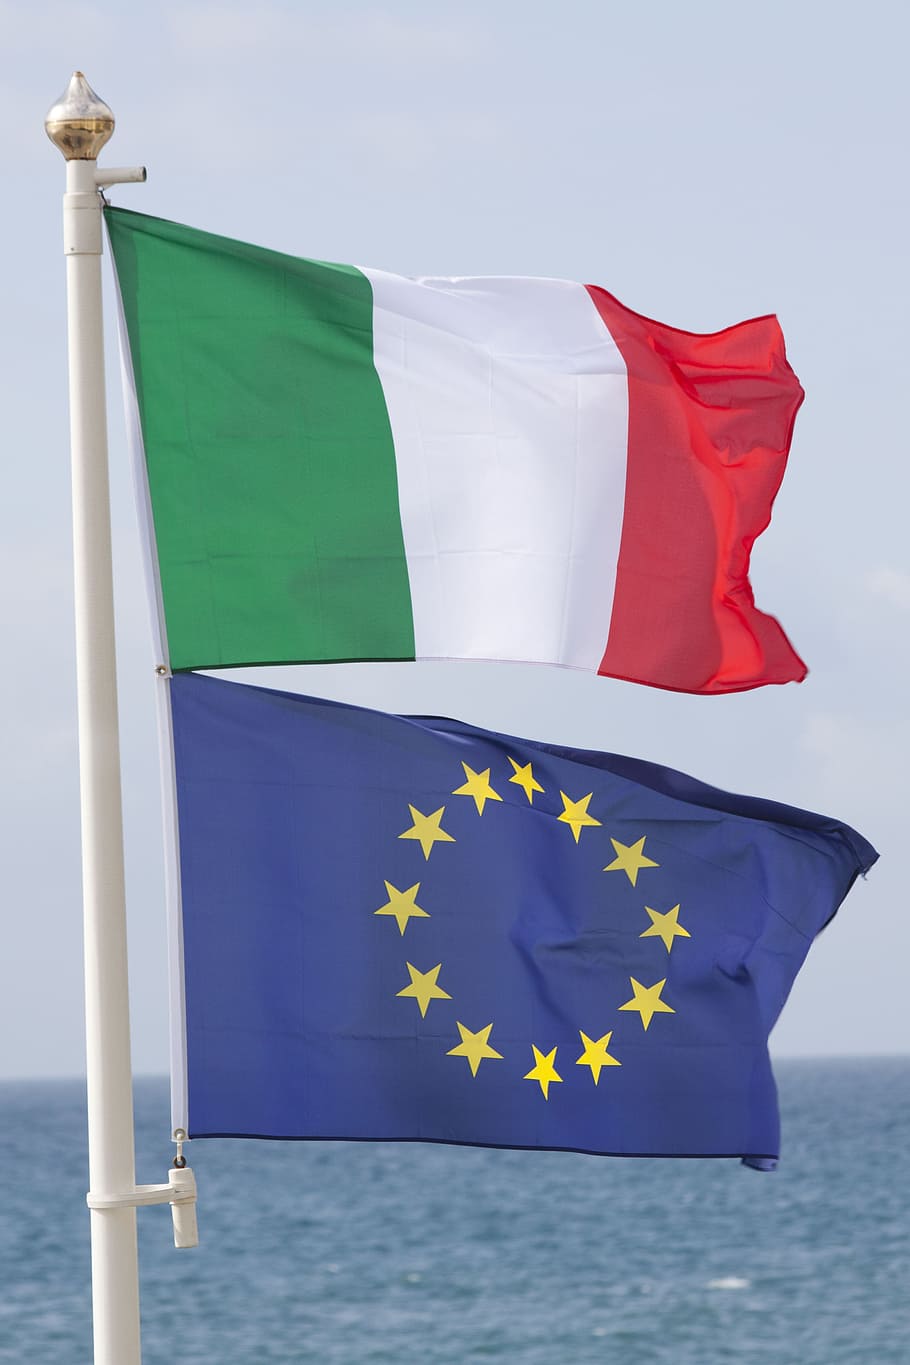 itália, europa, bandeira, italiano, europeu, união, país, identidade, objeto, onda